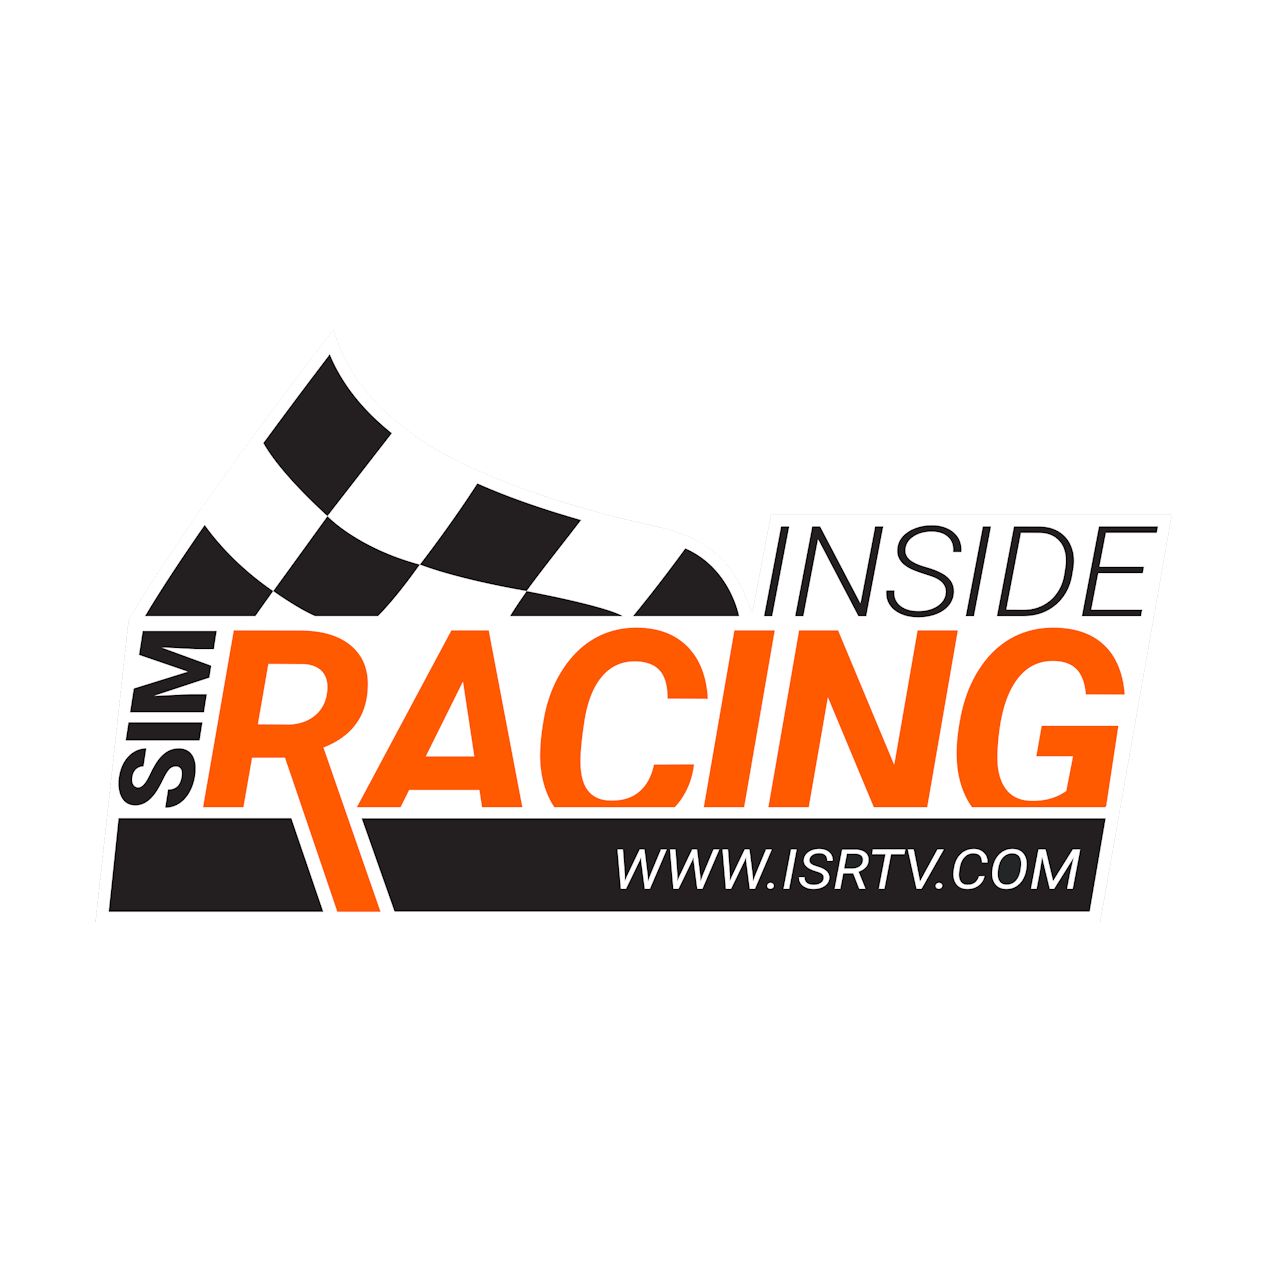 Inside Sim Racing